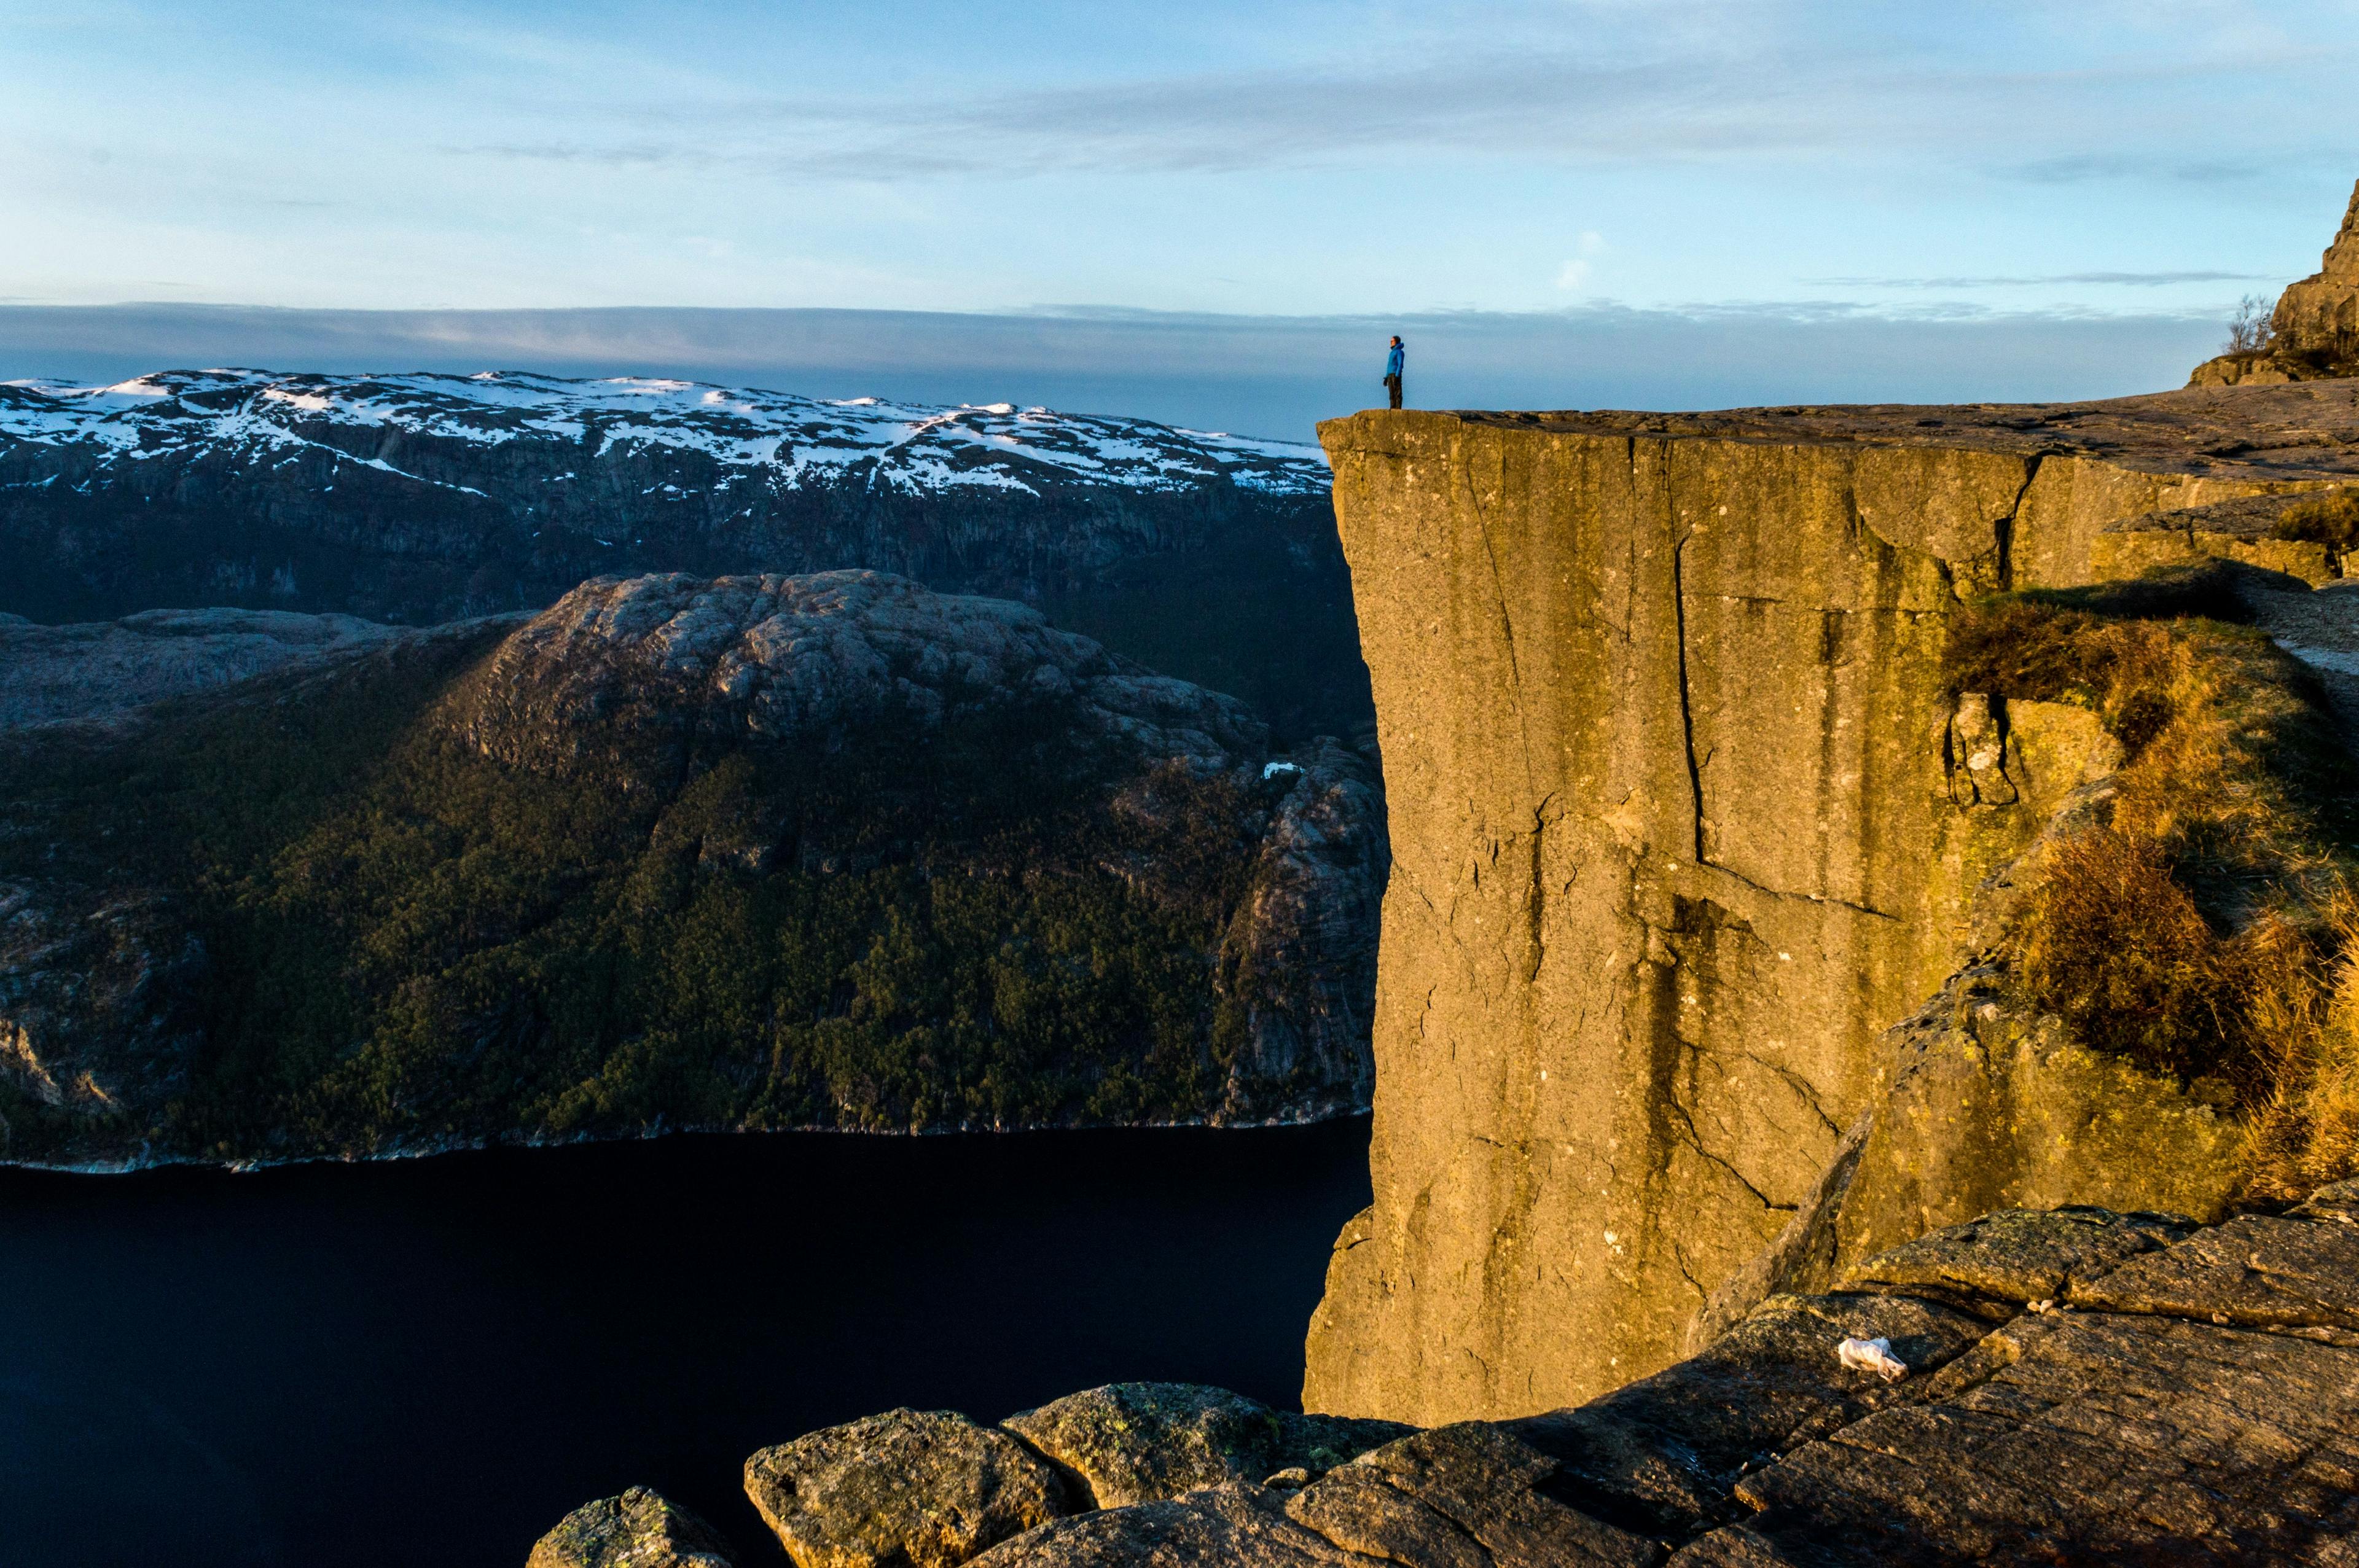 Man on the edge of Preikestolen in Norway.